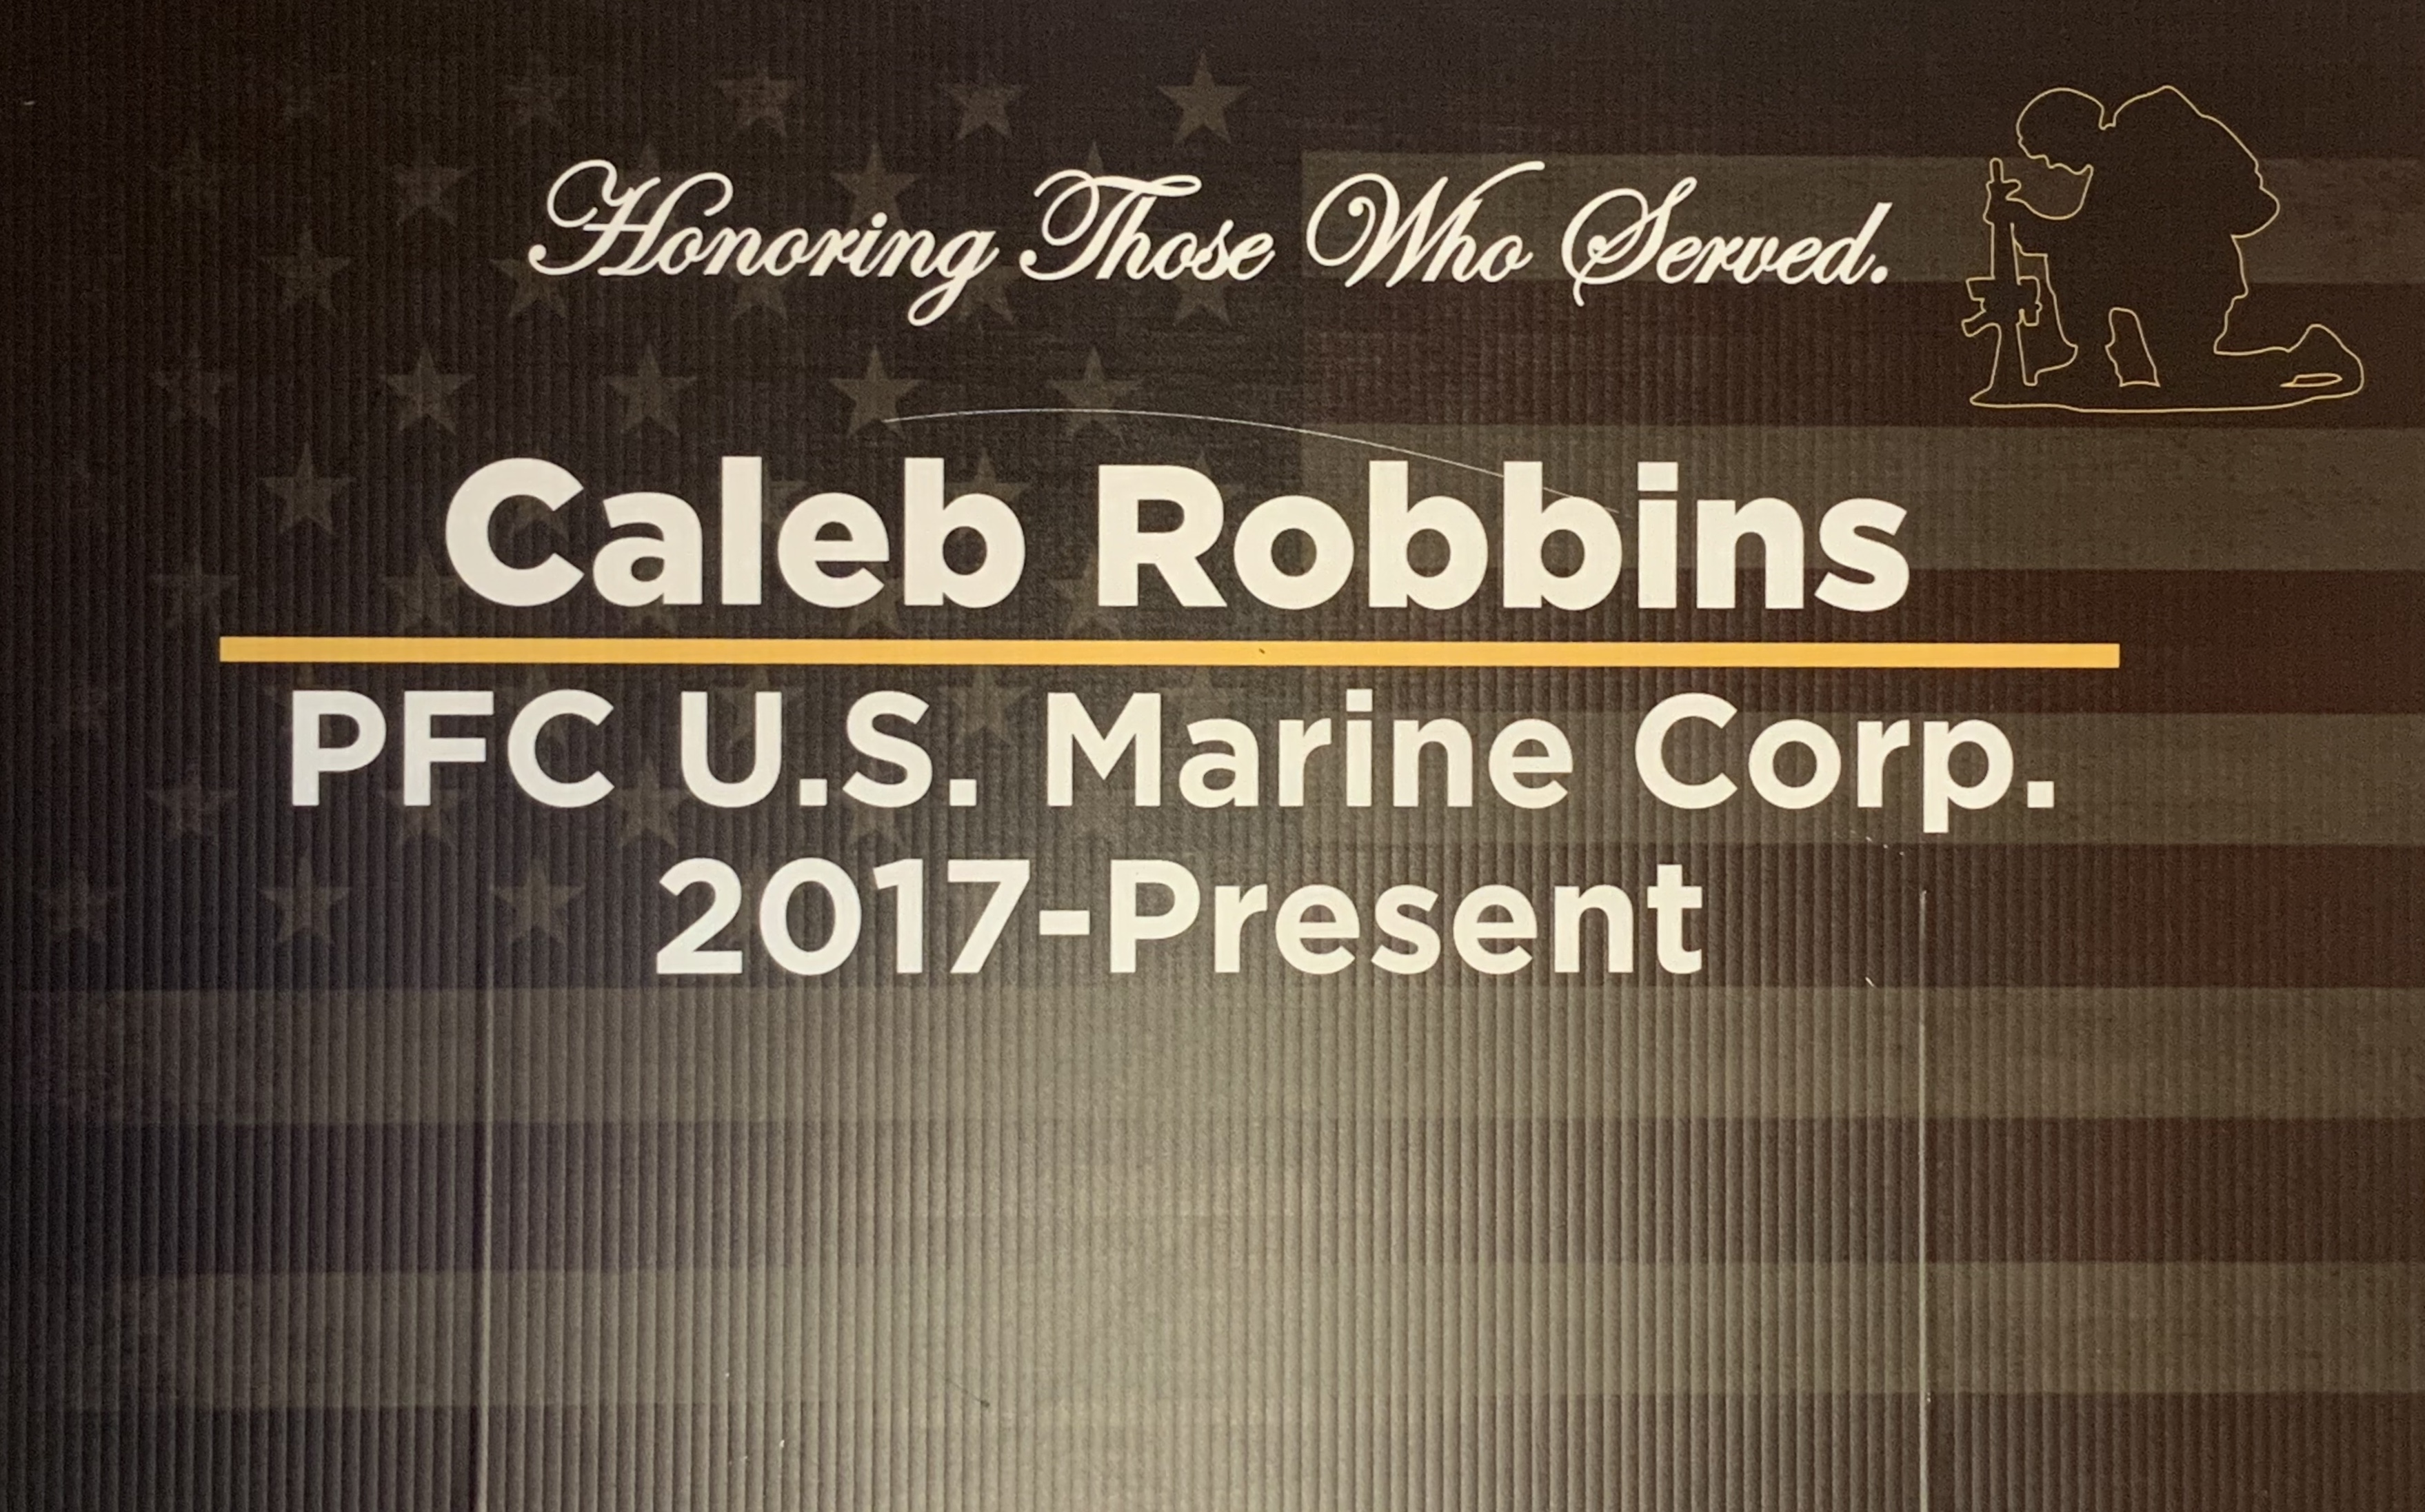 Caleb robbins